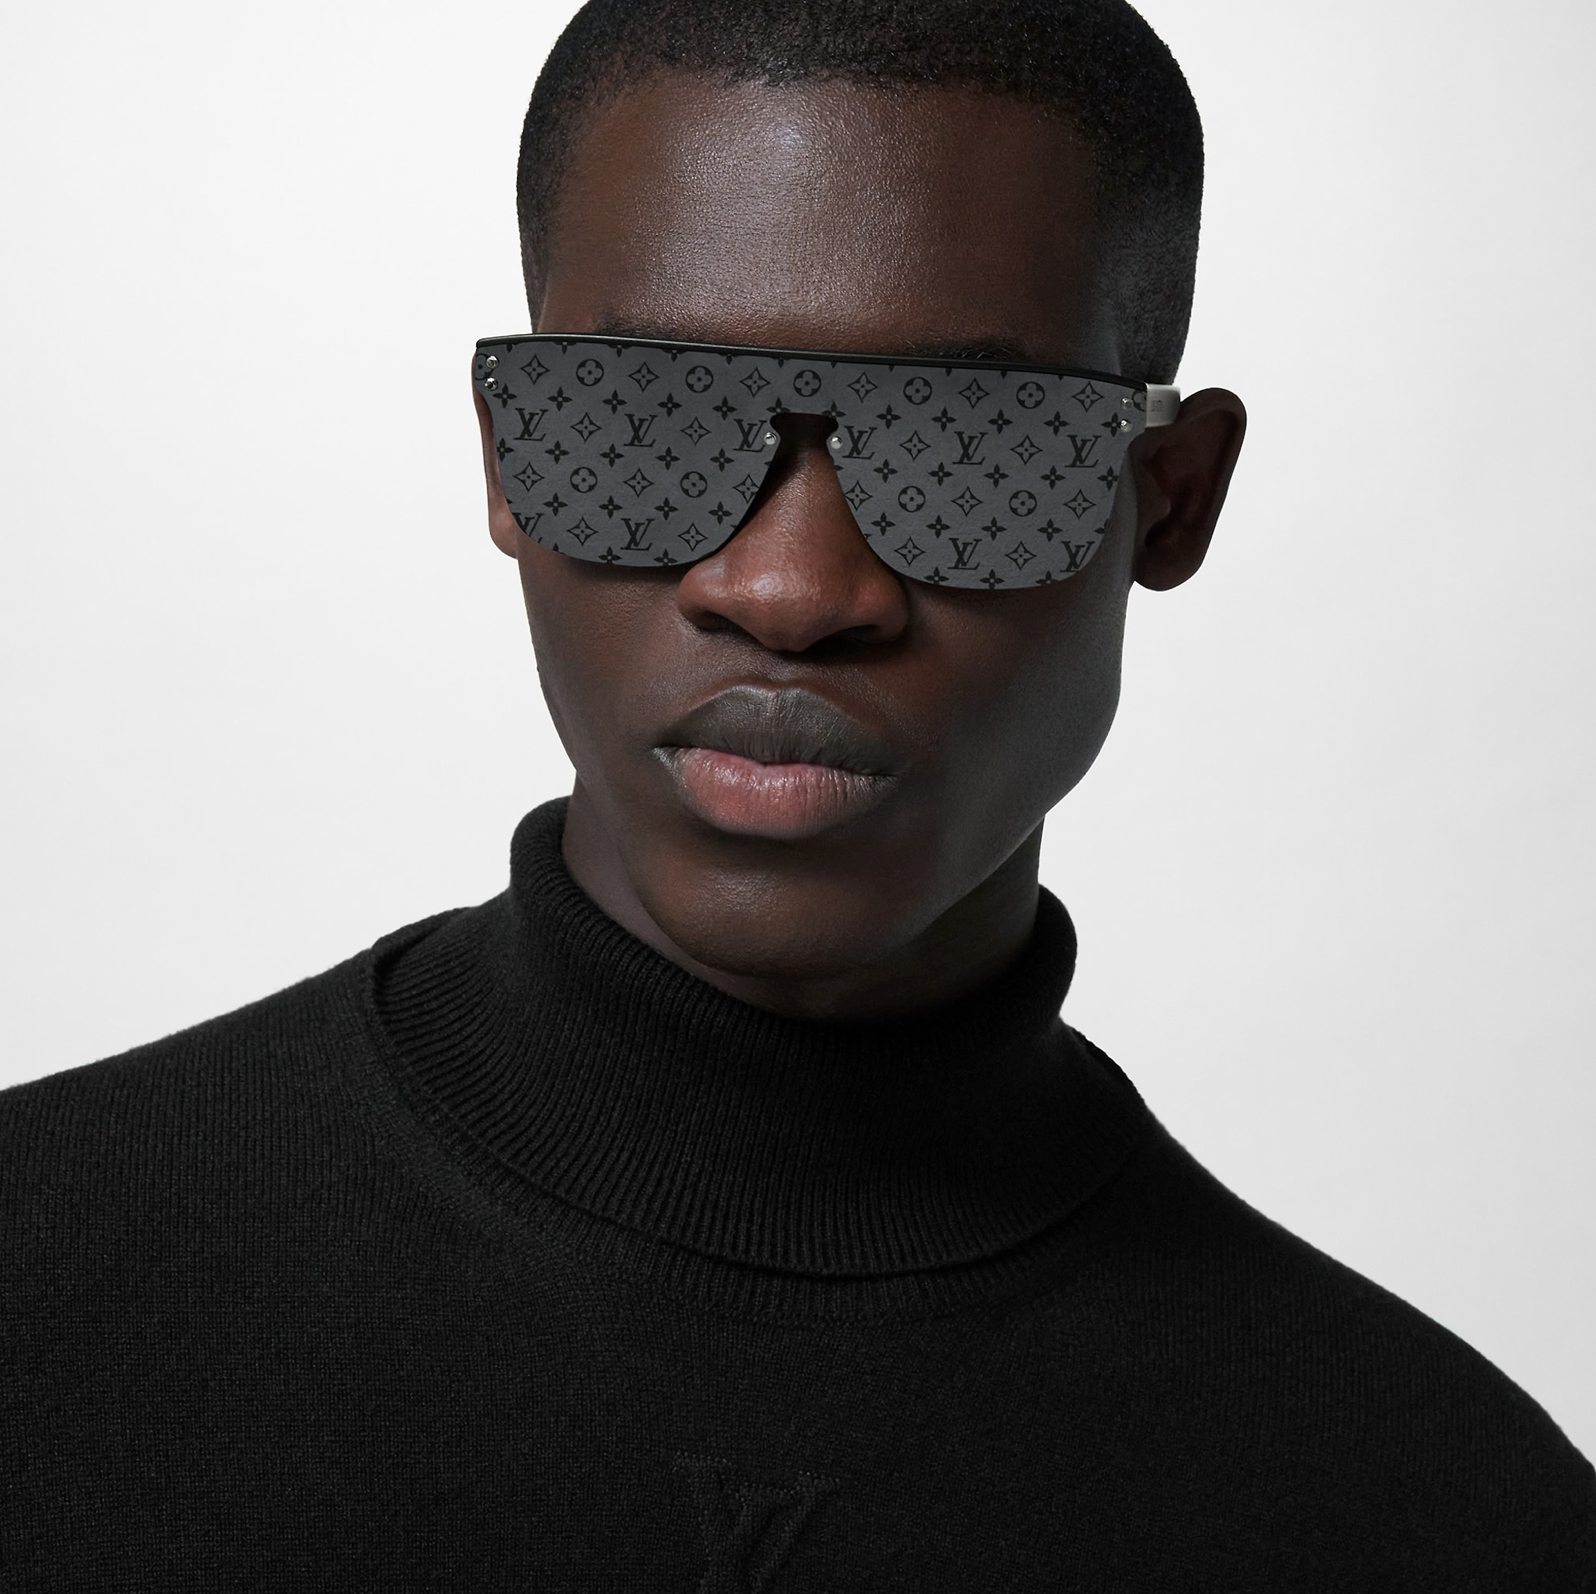 Louis Vuitton 2021 Monogram Waimea L Sunglasses - Black Sunglasses